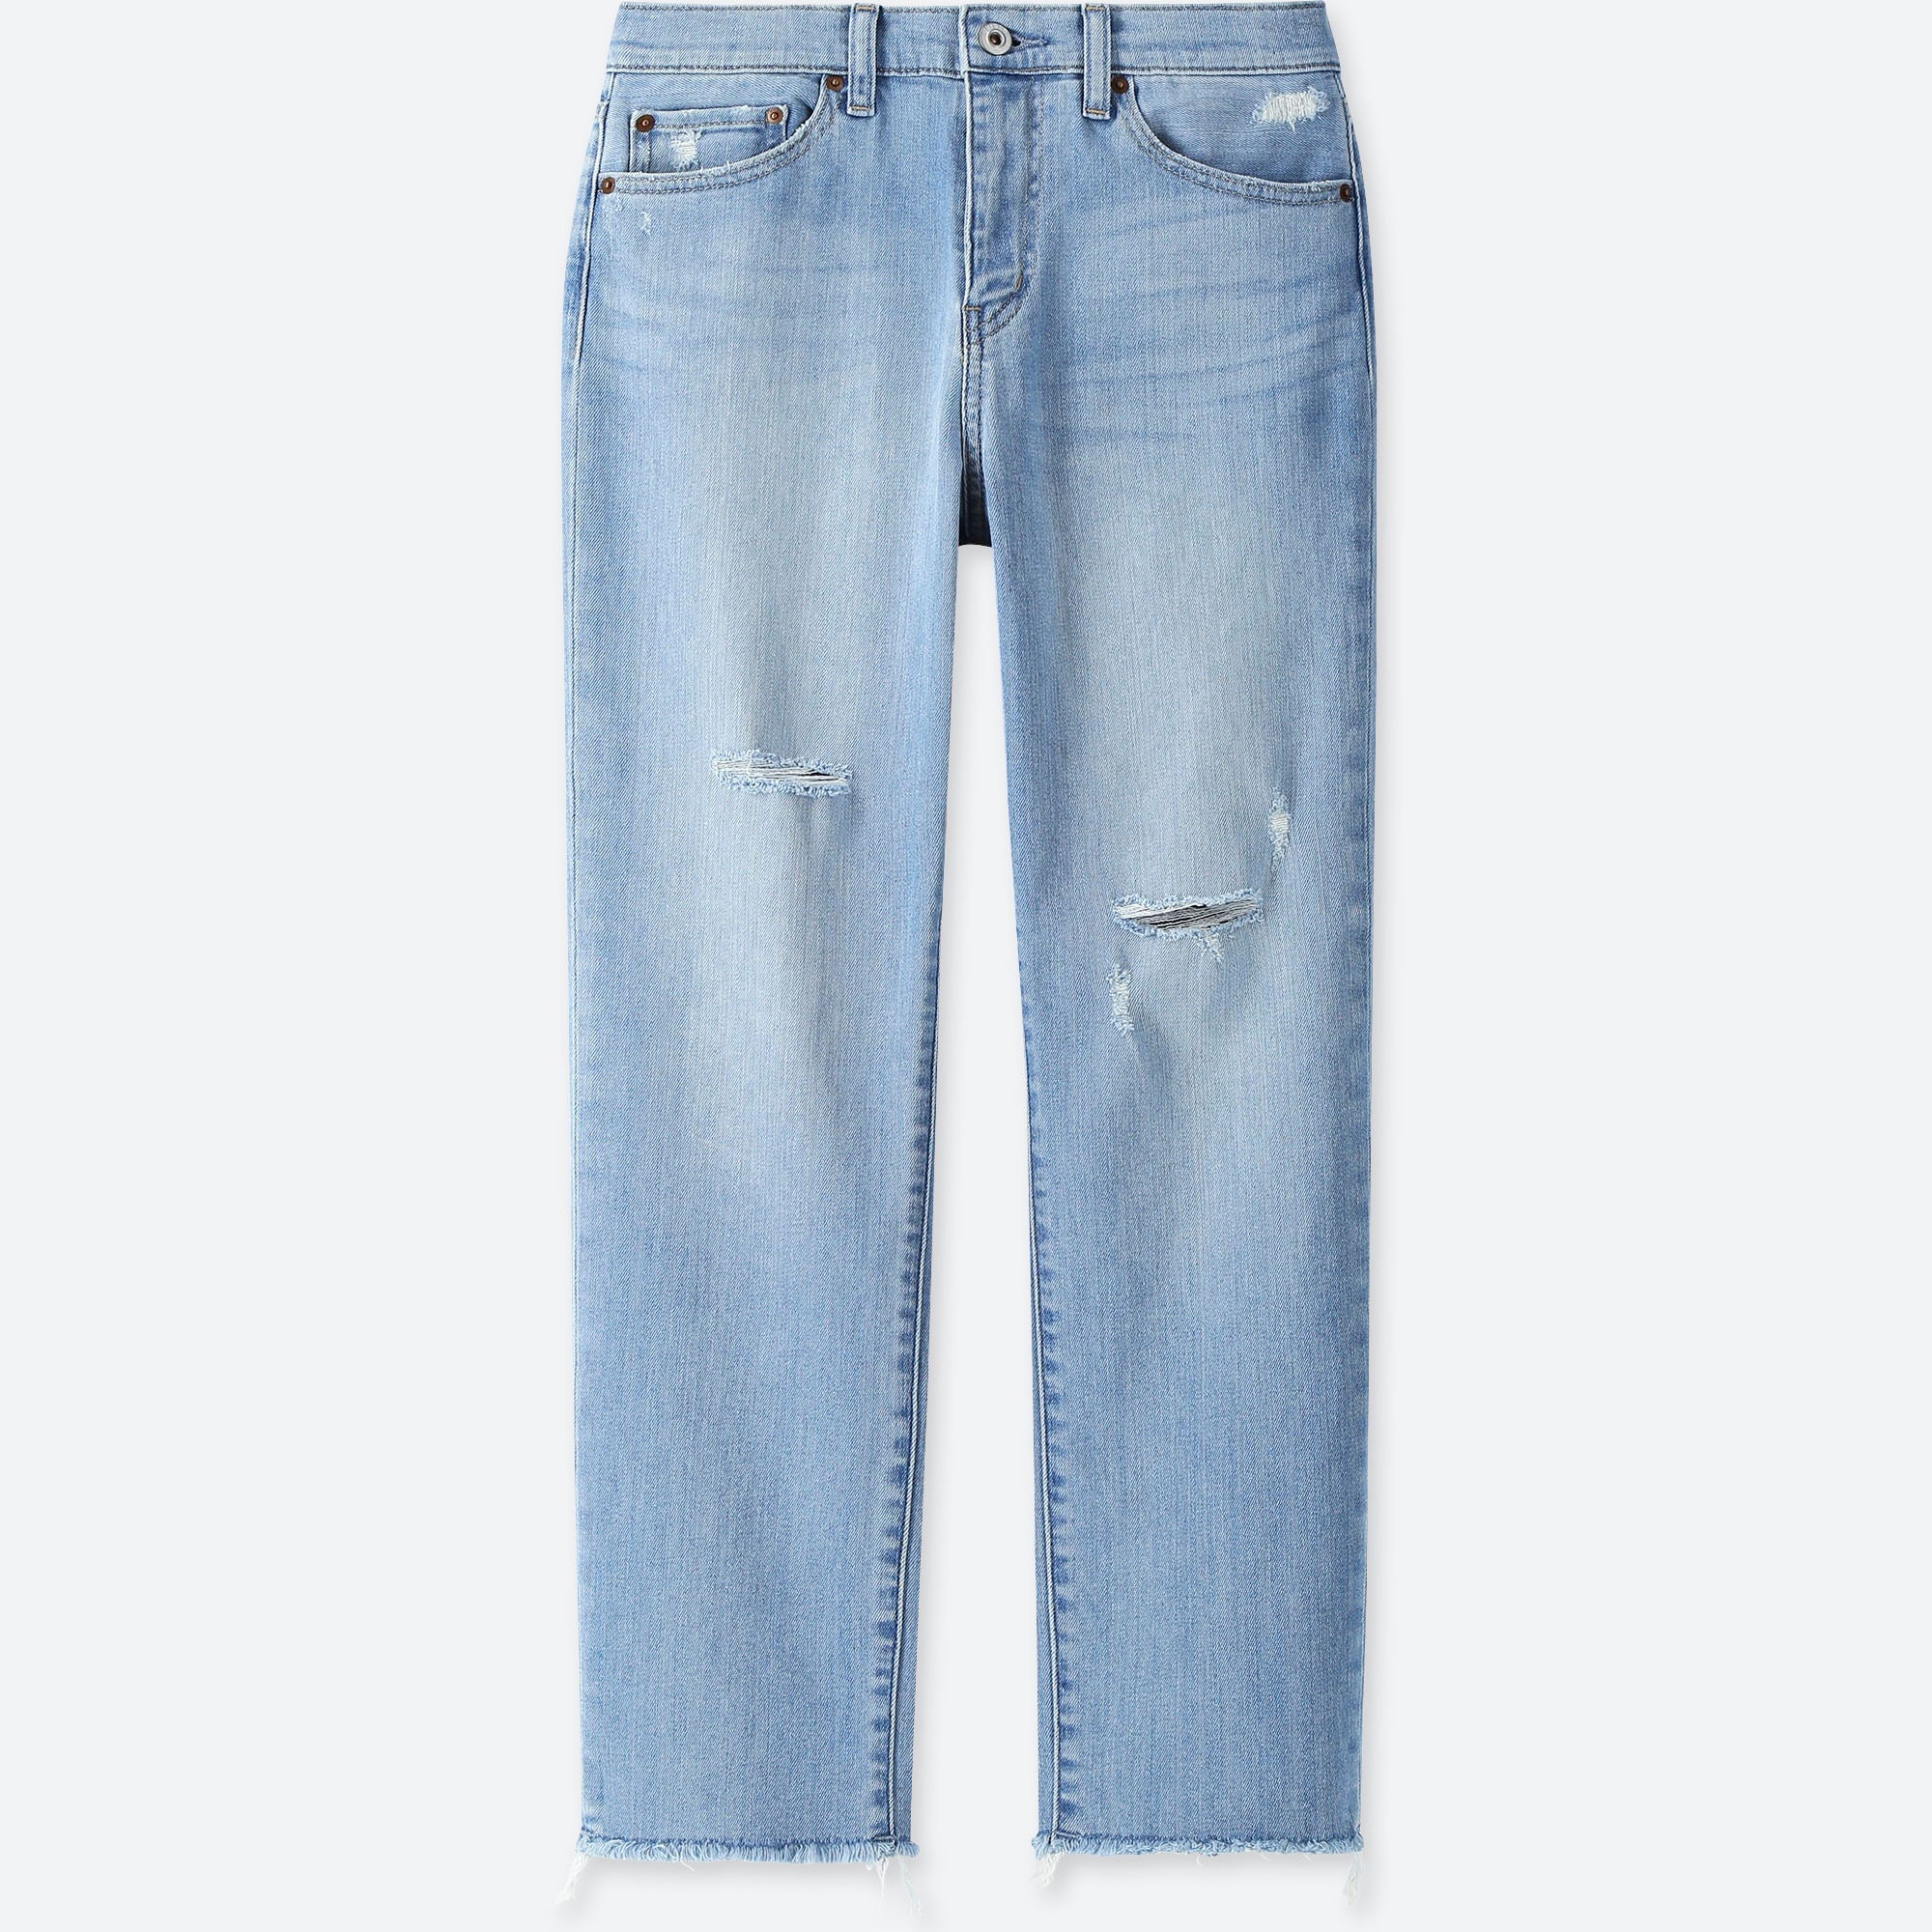 uniqlo jeans size chart